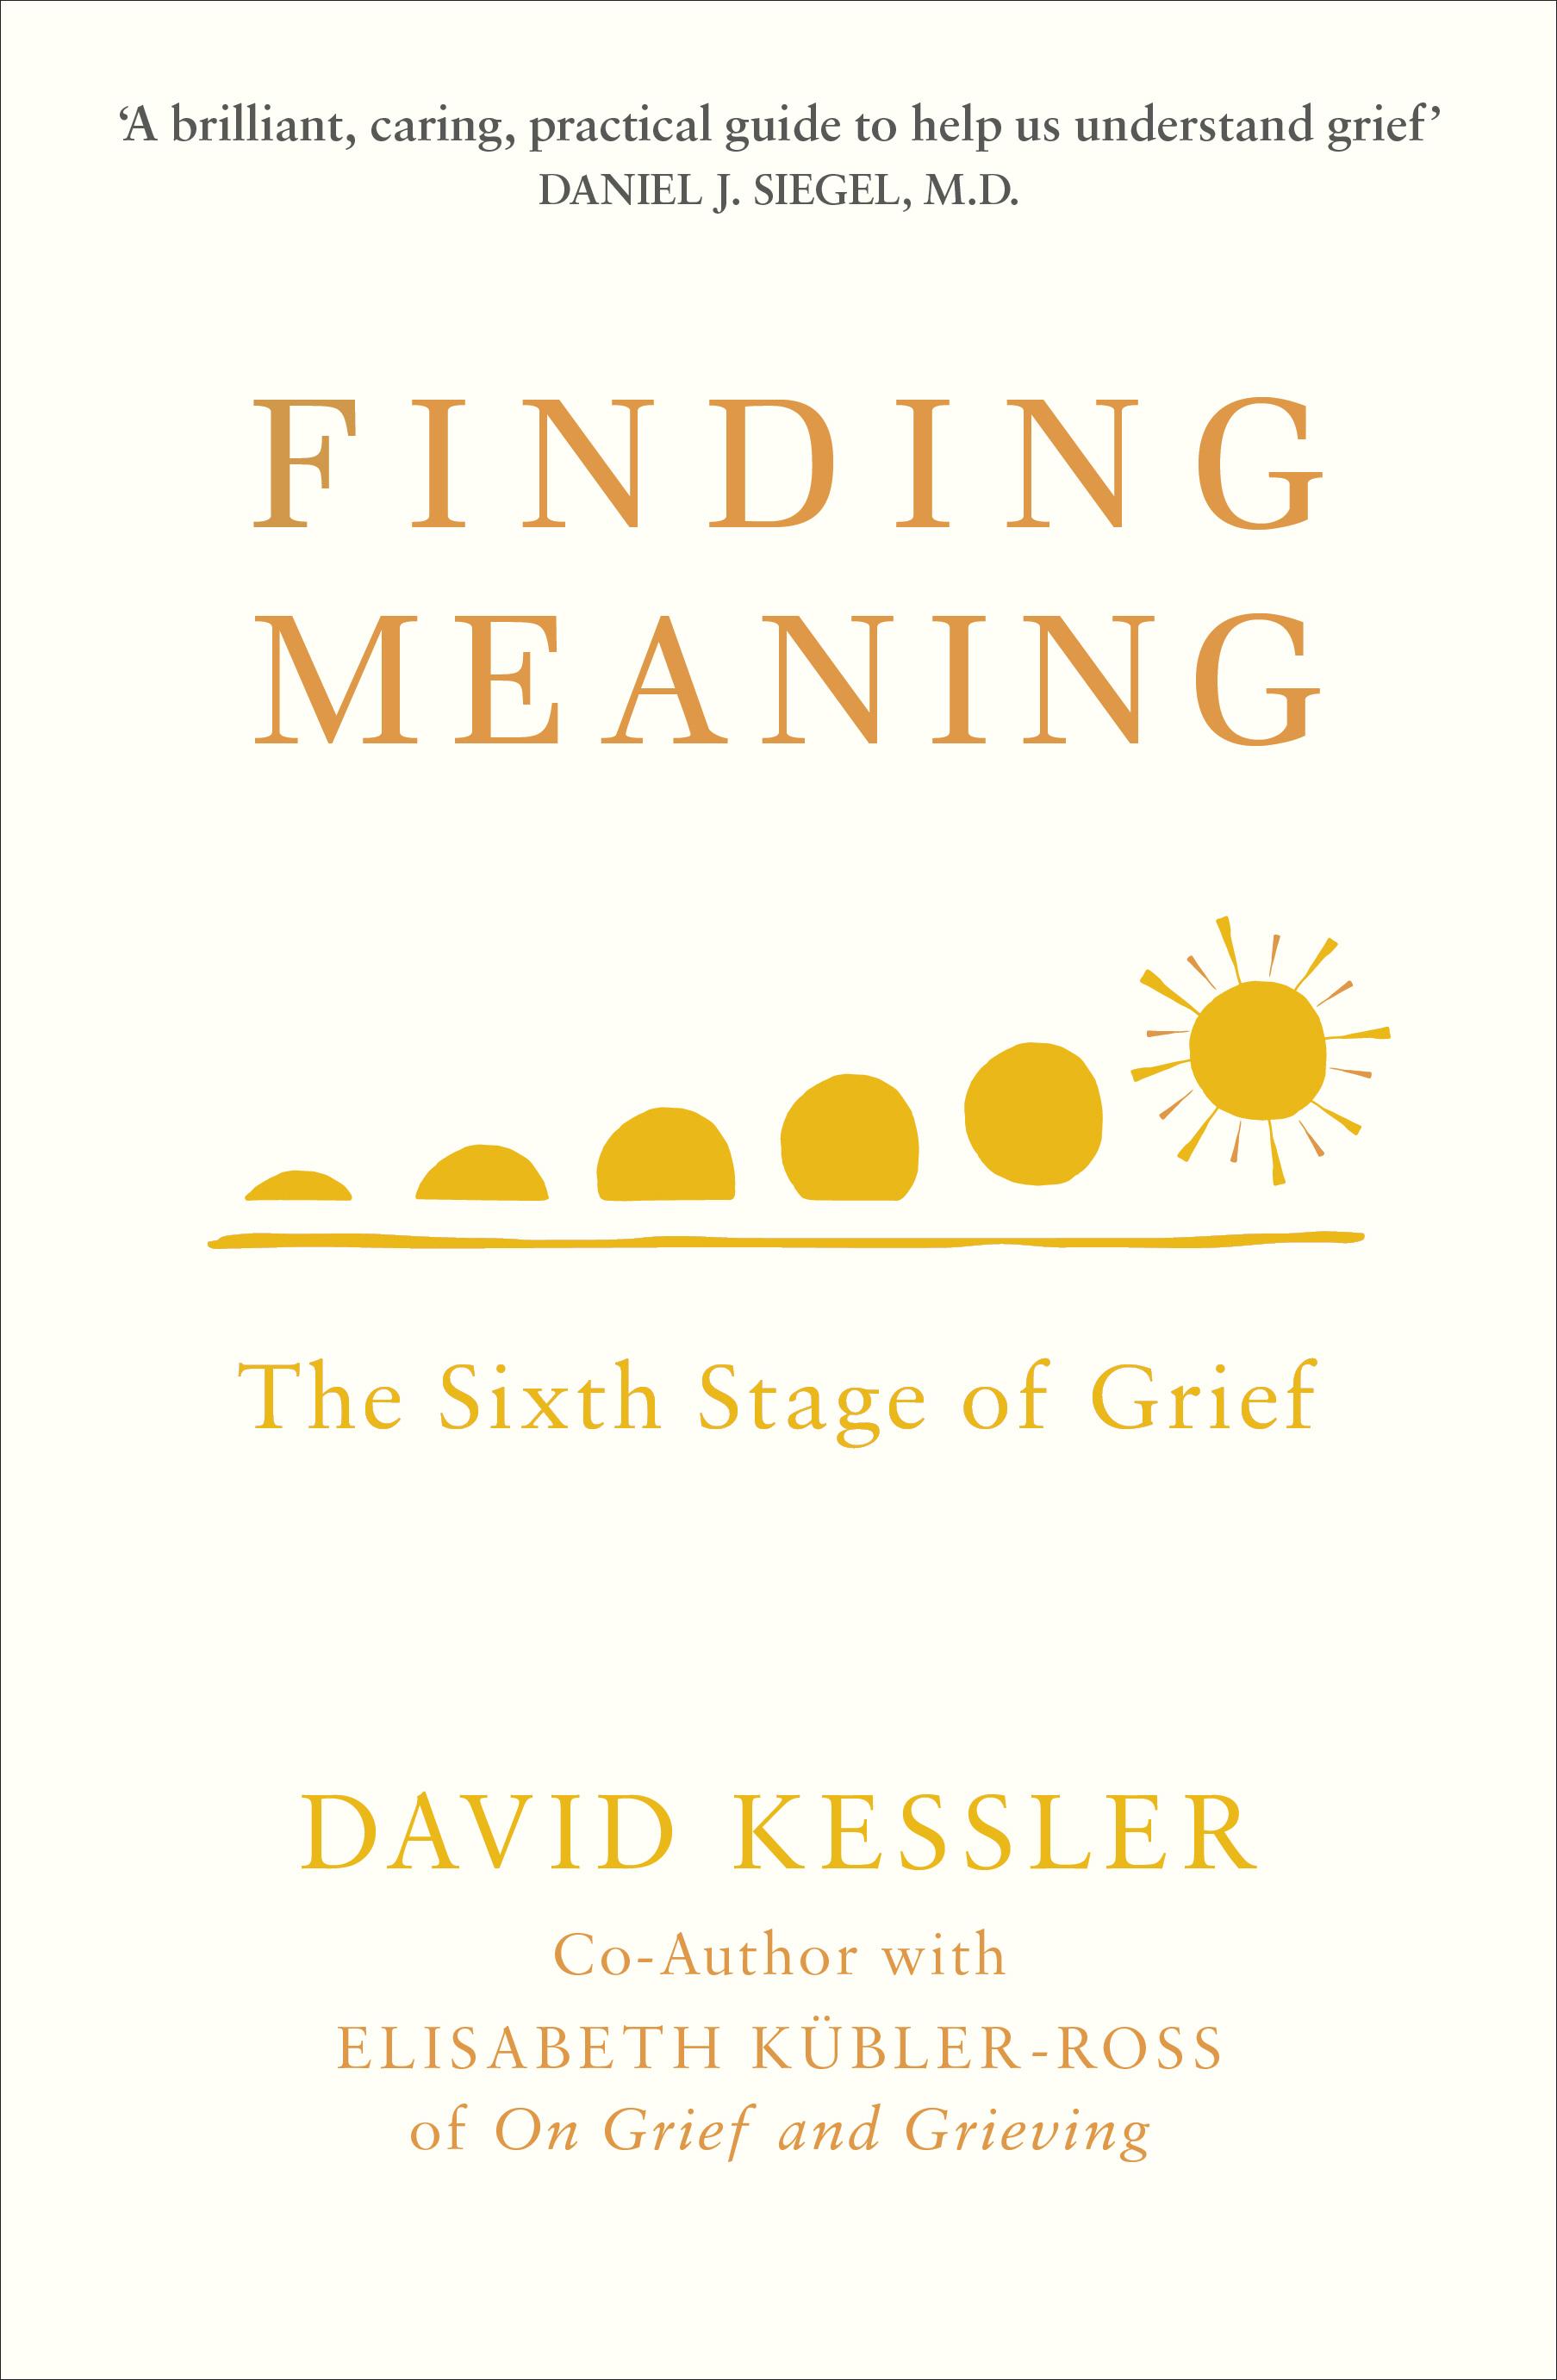 Finding Meaning - David Kessler